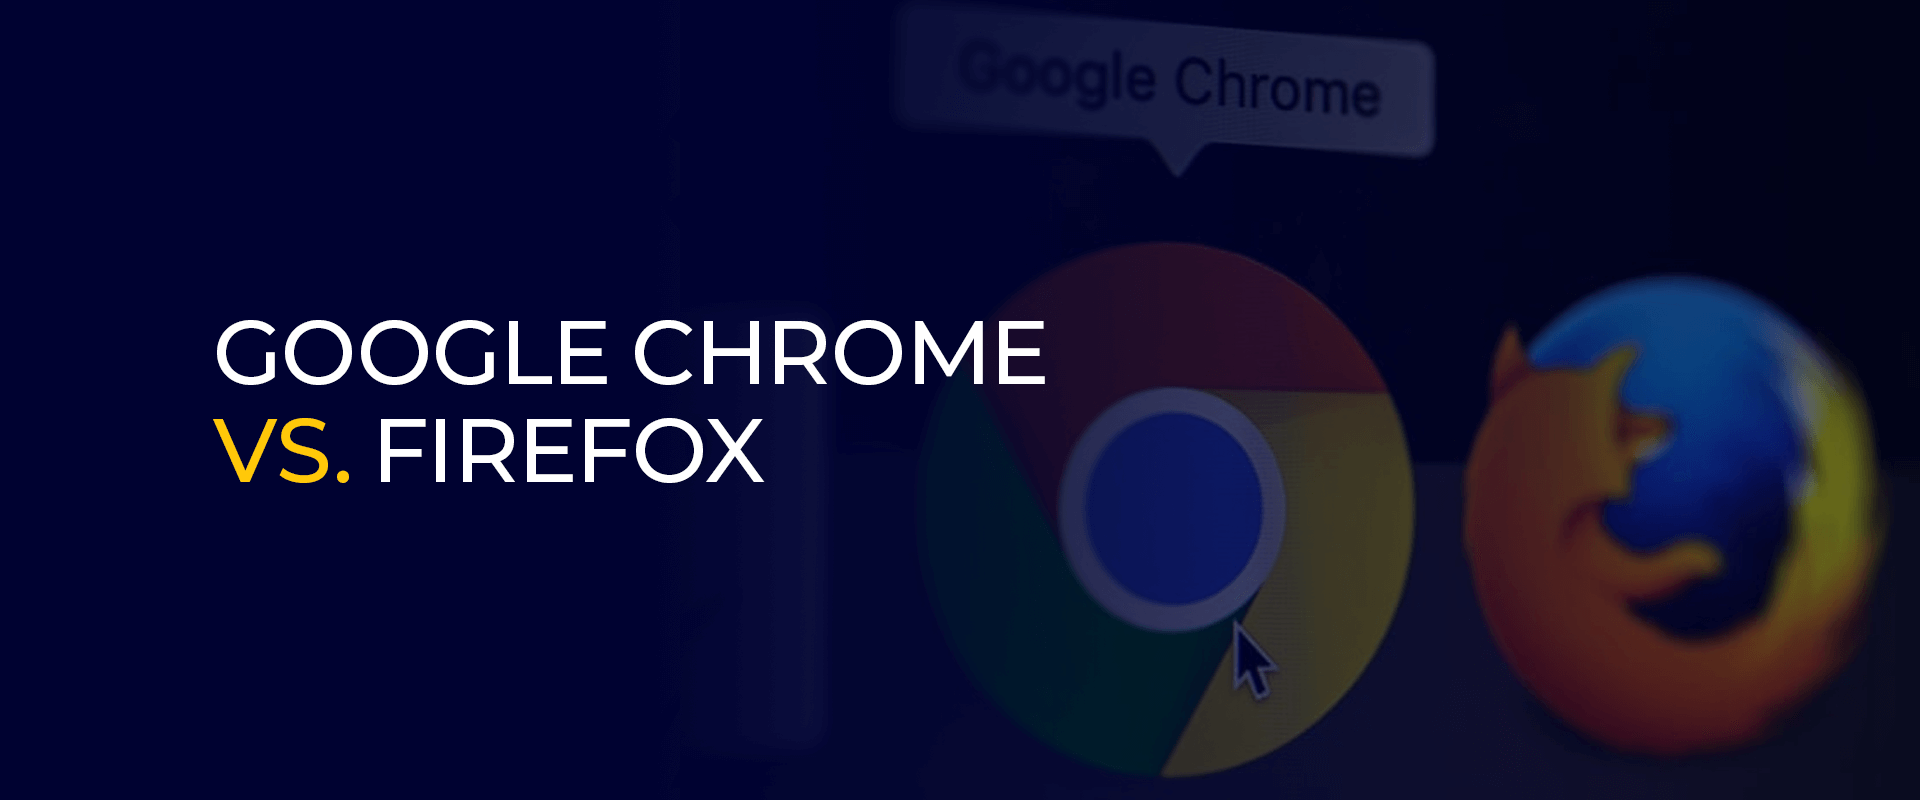 Google Chrome contro Firefox